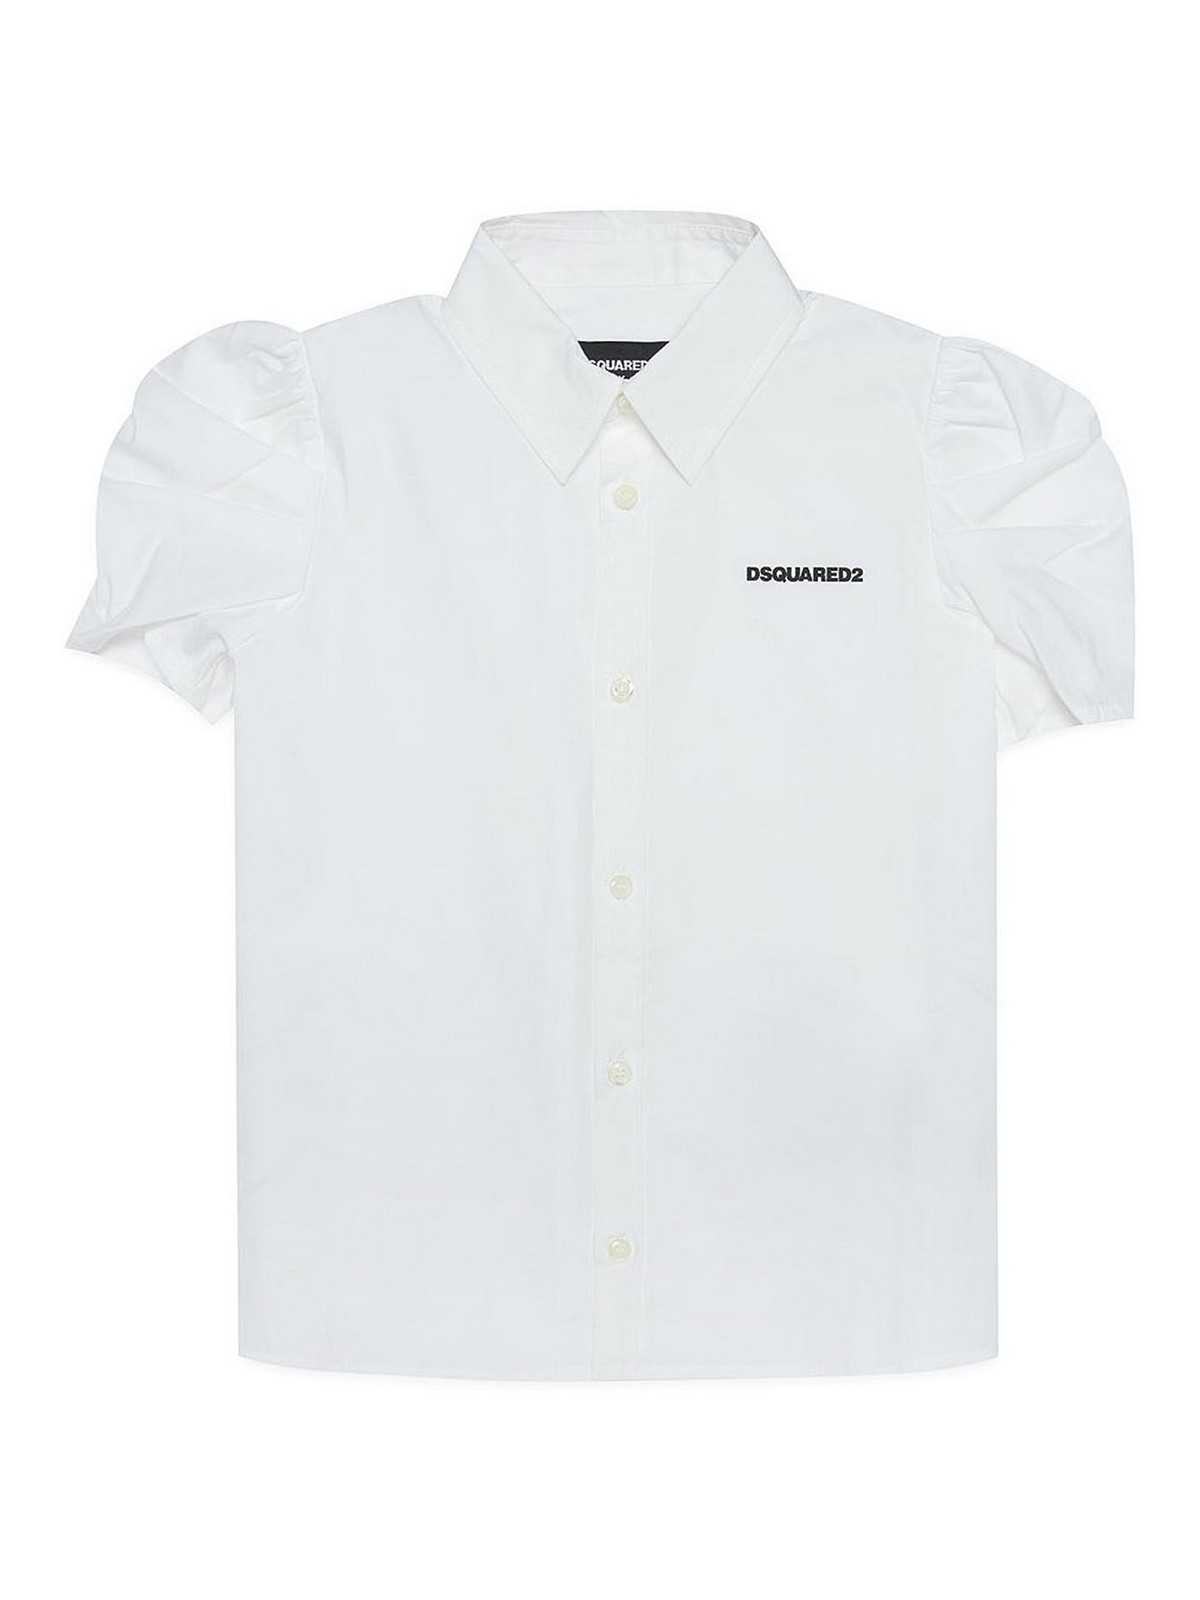 Dsquared2 Kids' White Short Sleeve Shirt